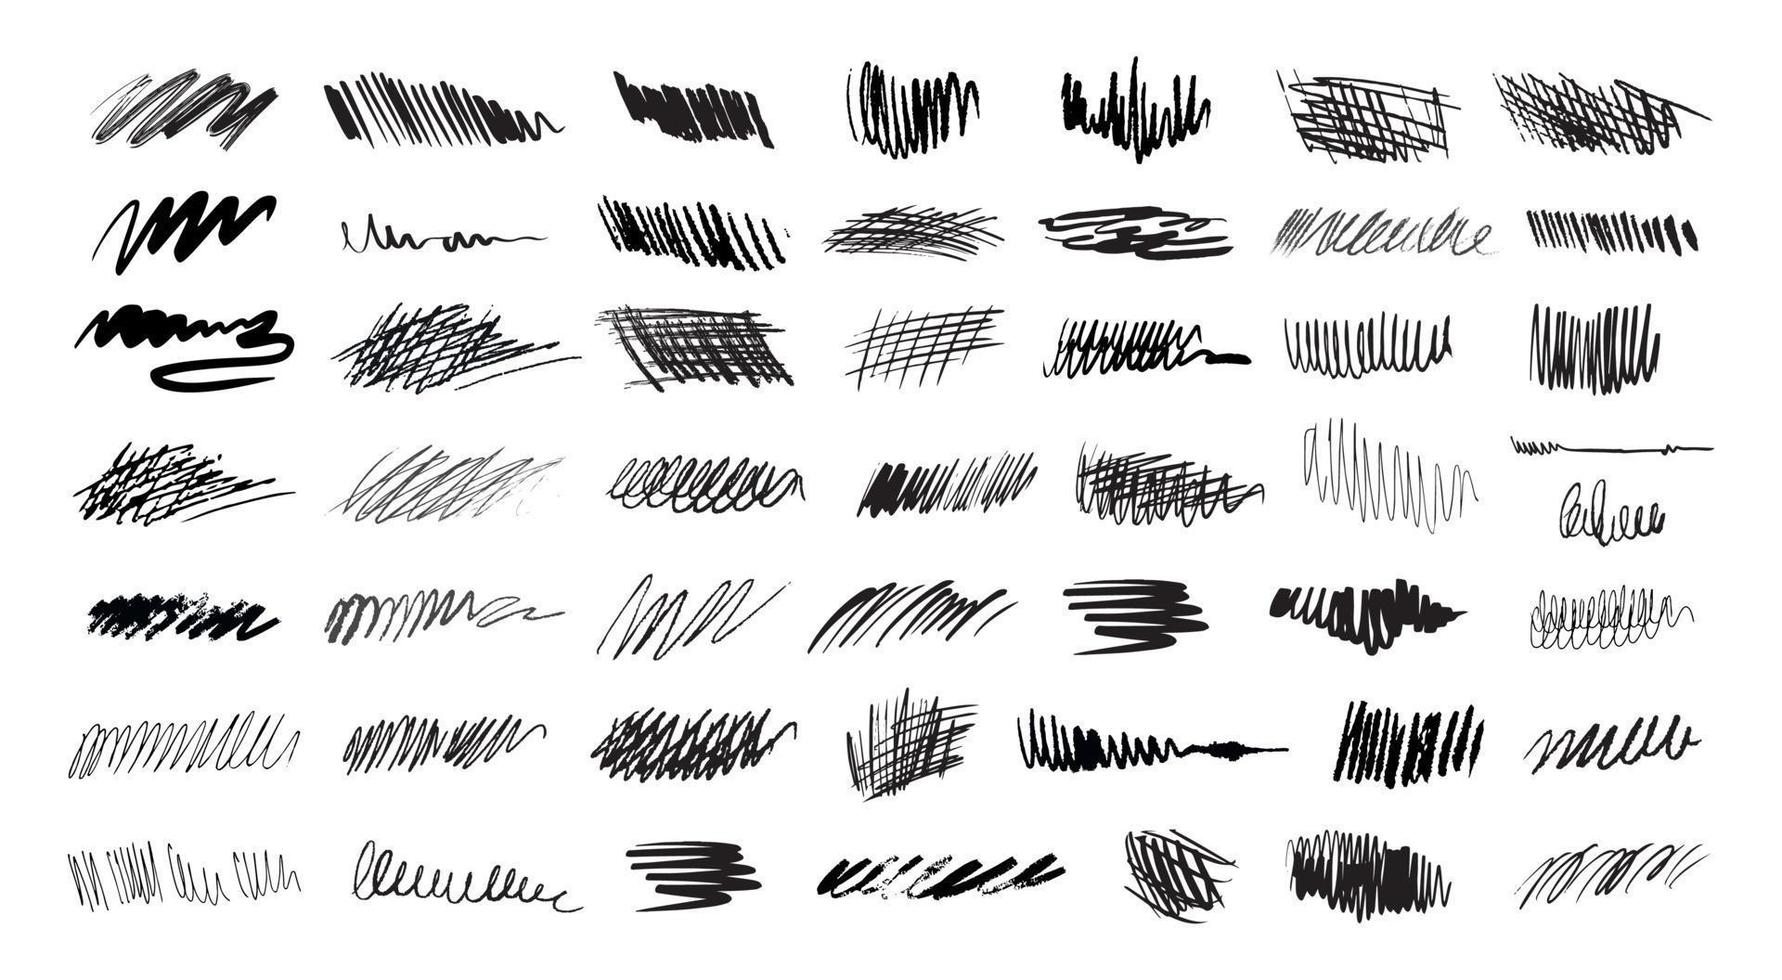 Scribble Texture Collection vector